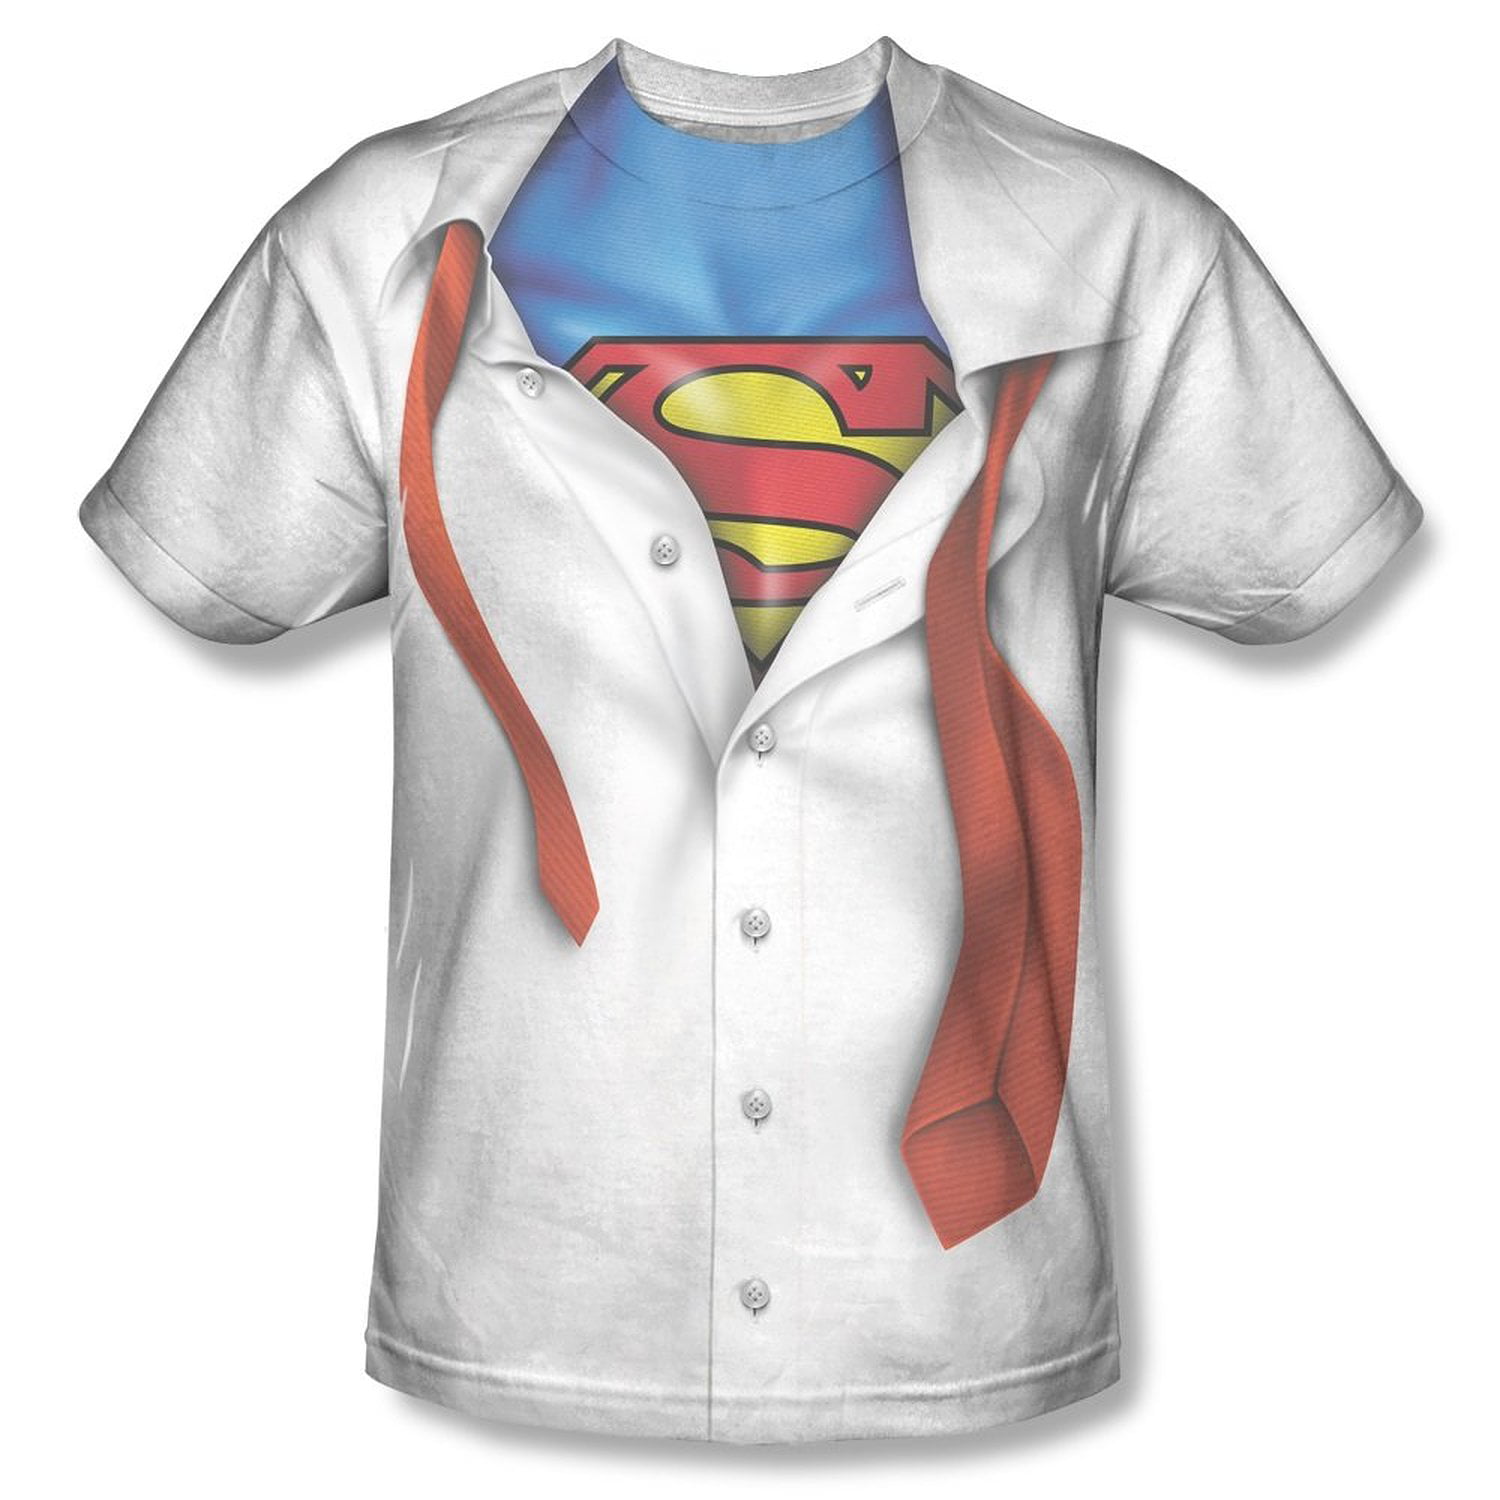 Kent Super Transform Superman Clark Tie T-Shirt Costume Hero Adult